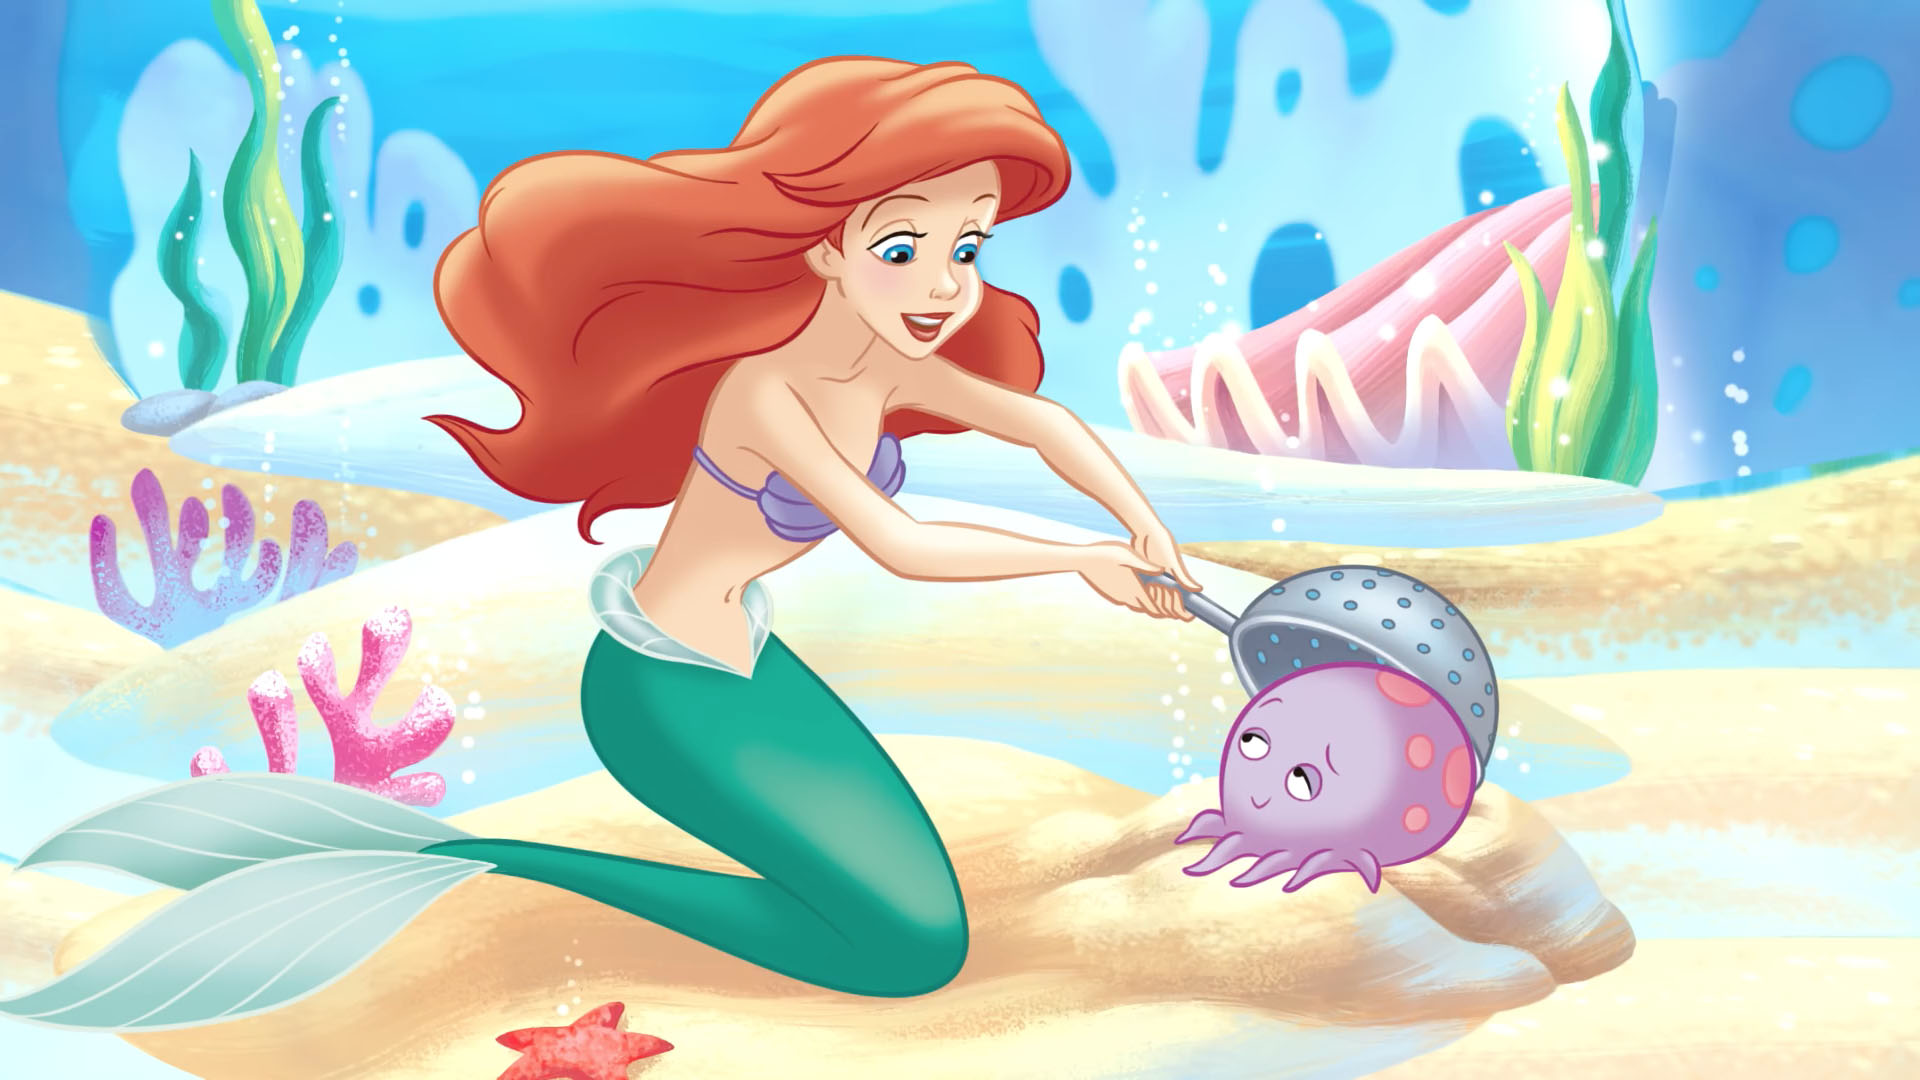 Ariel is picking up an octopus in the ocean - Ariel